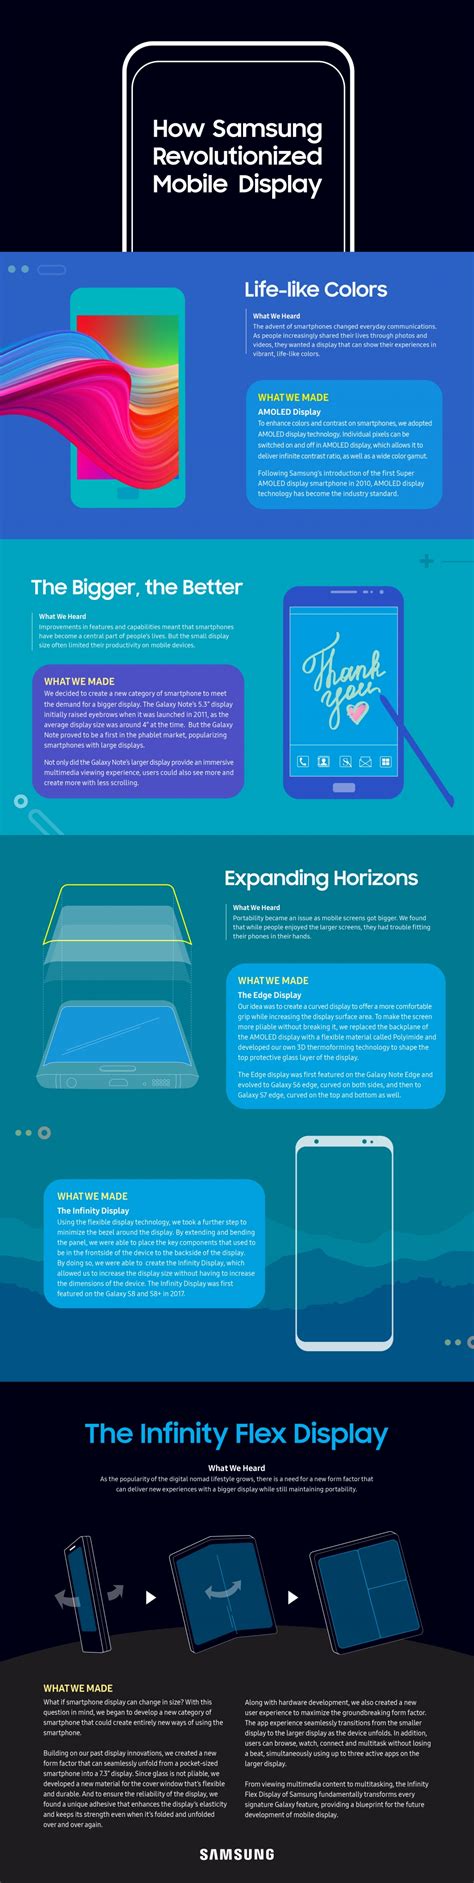 Infographic Sdc18 How Samsung Revolutionized Mobile Display